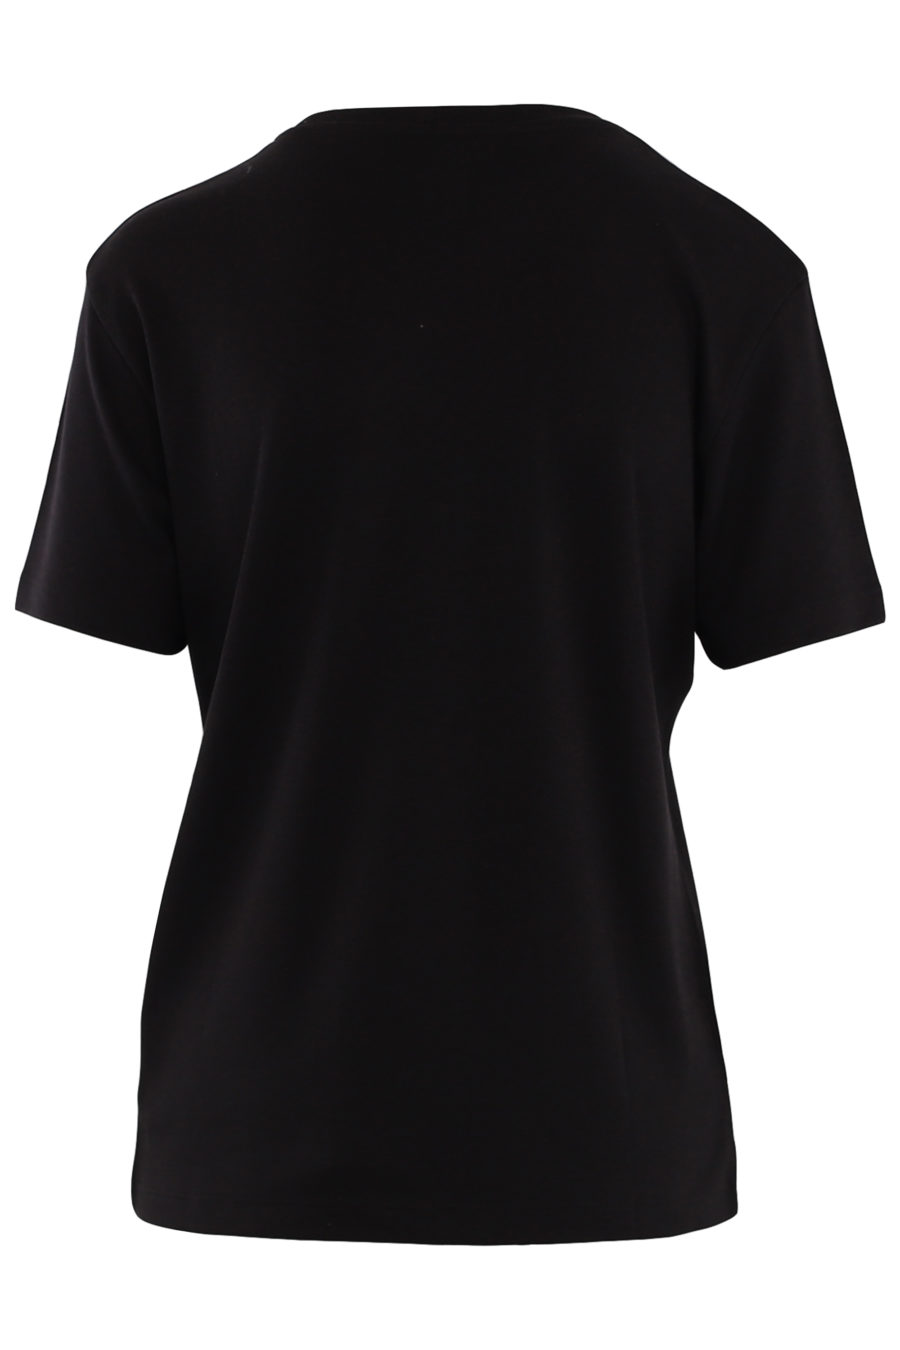 Camiseta unisex de color negro con logotipo - e224d47c1c109734bda8f433e87dc3553e04ca8b